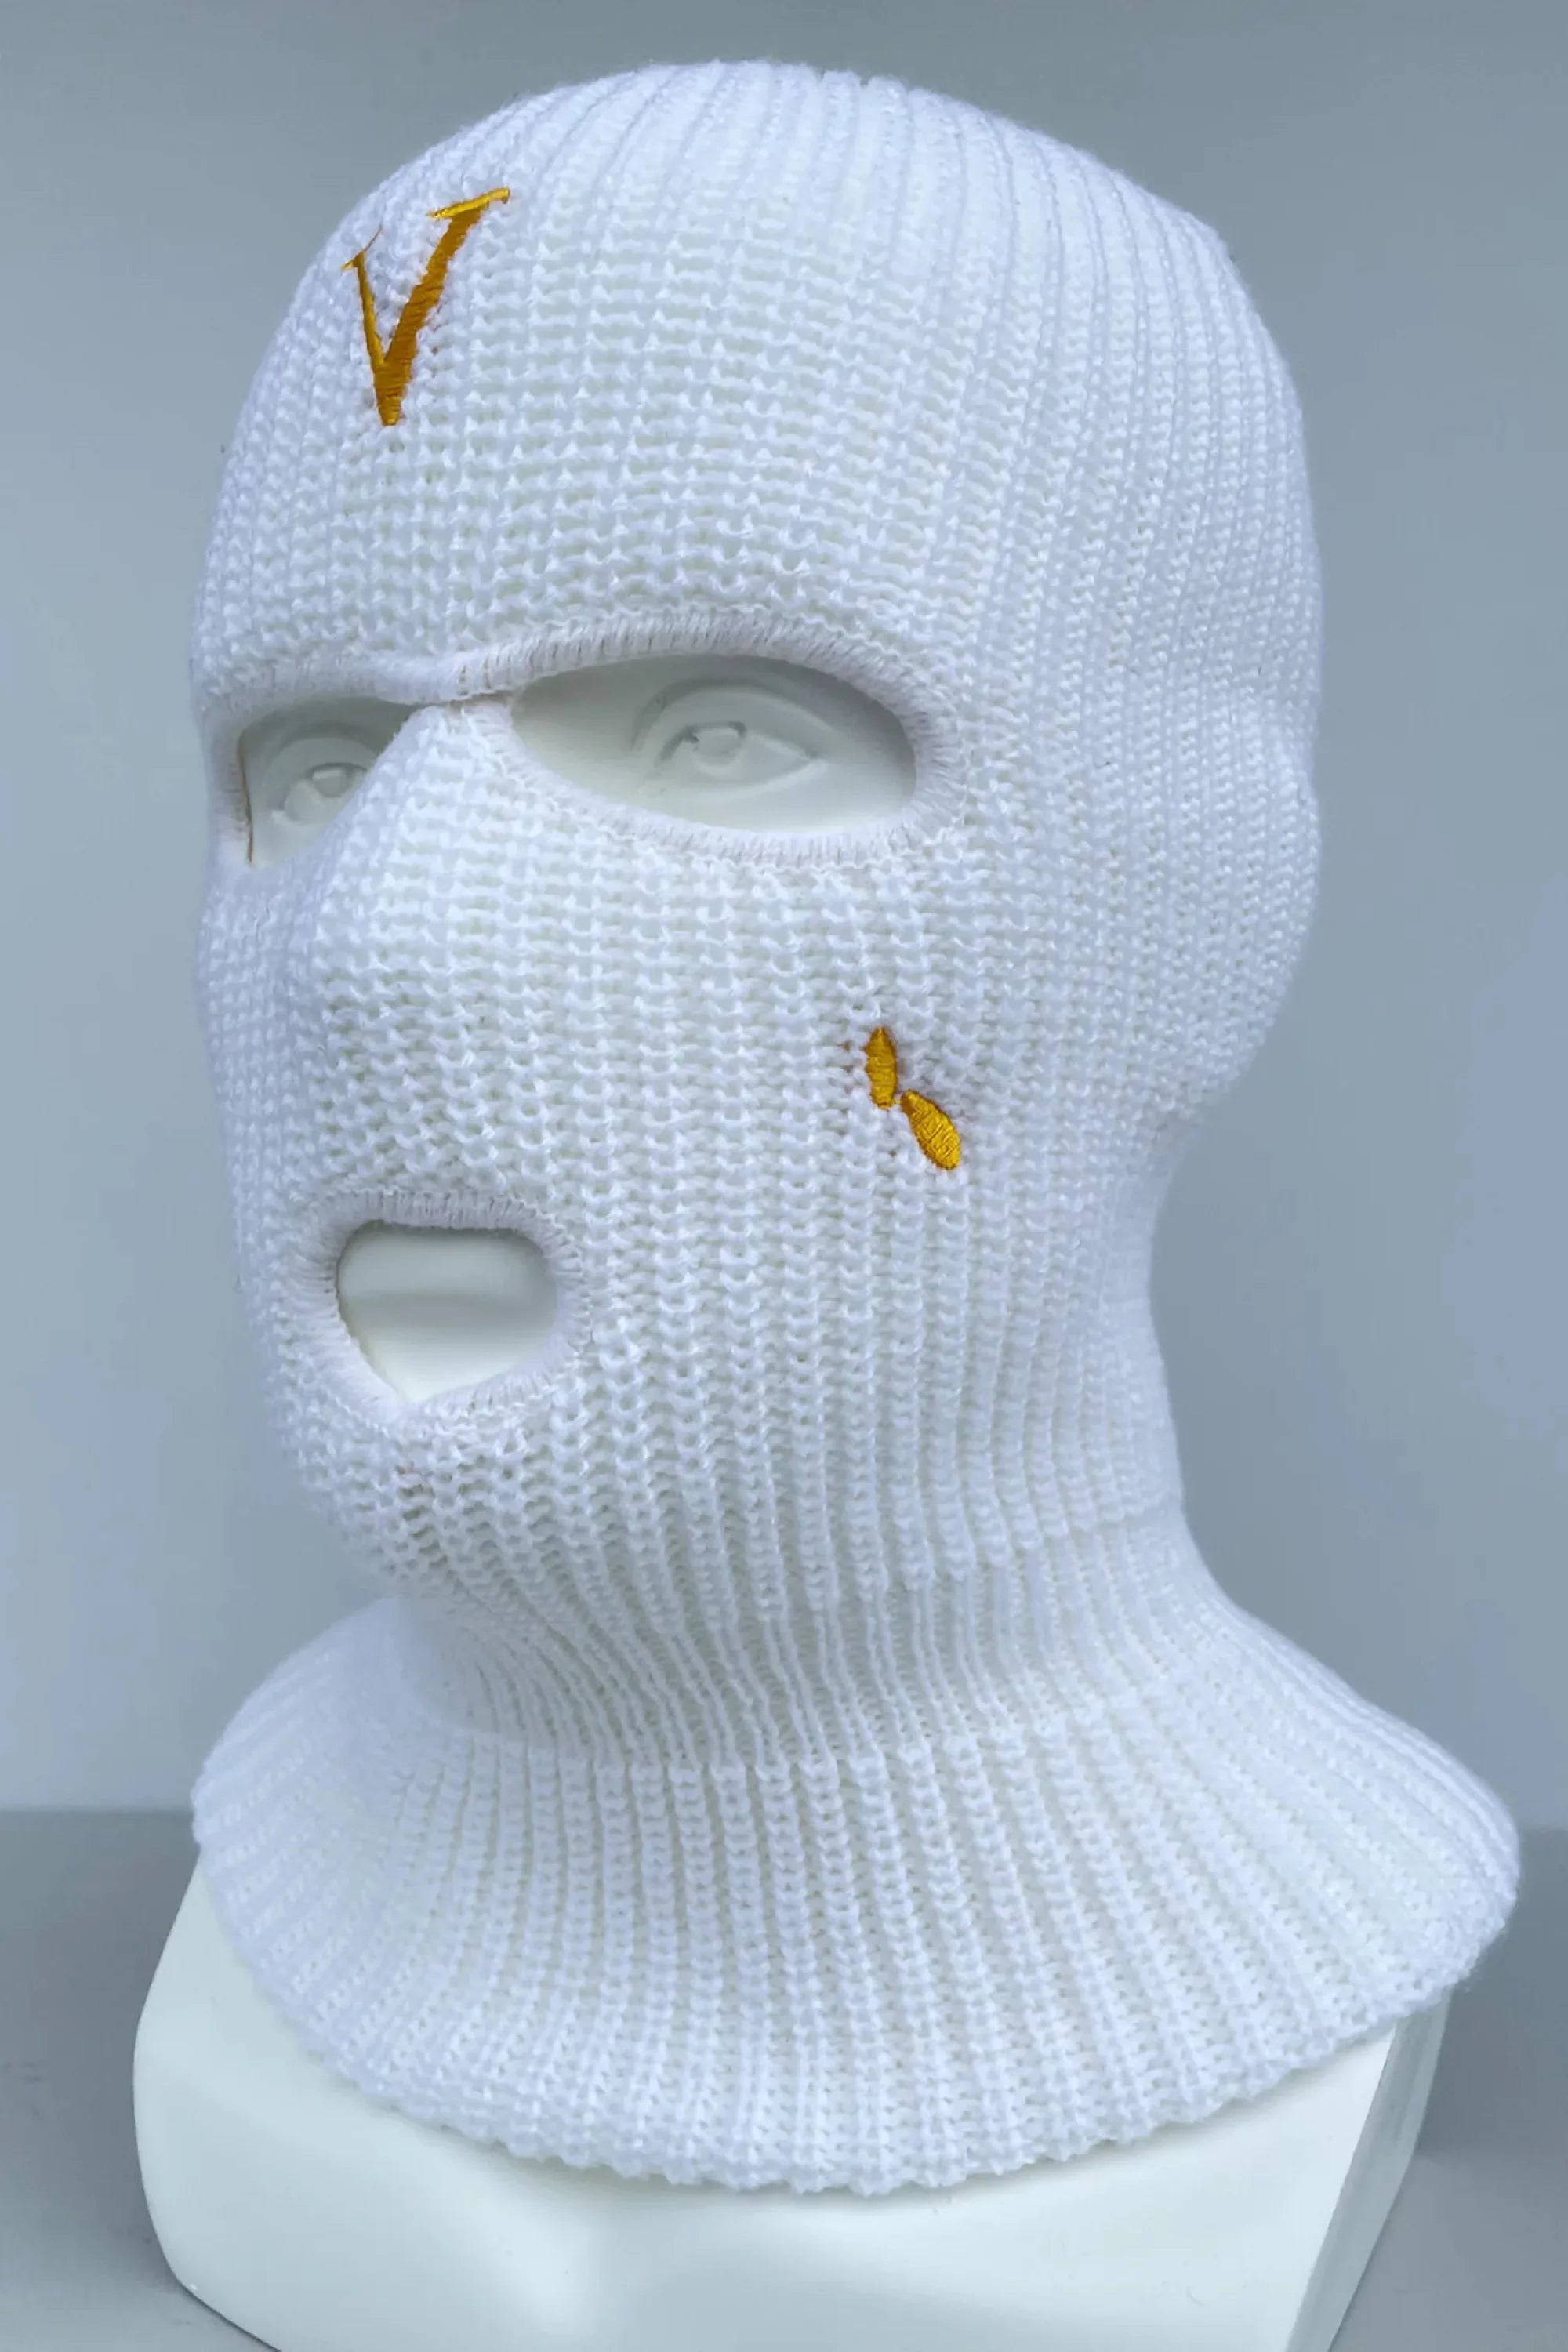 White Vlone Embroidery 3 Holes Ski Mask - White